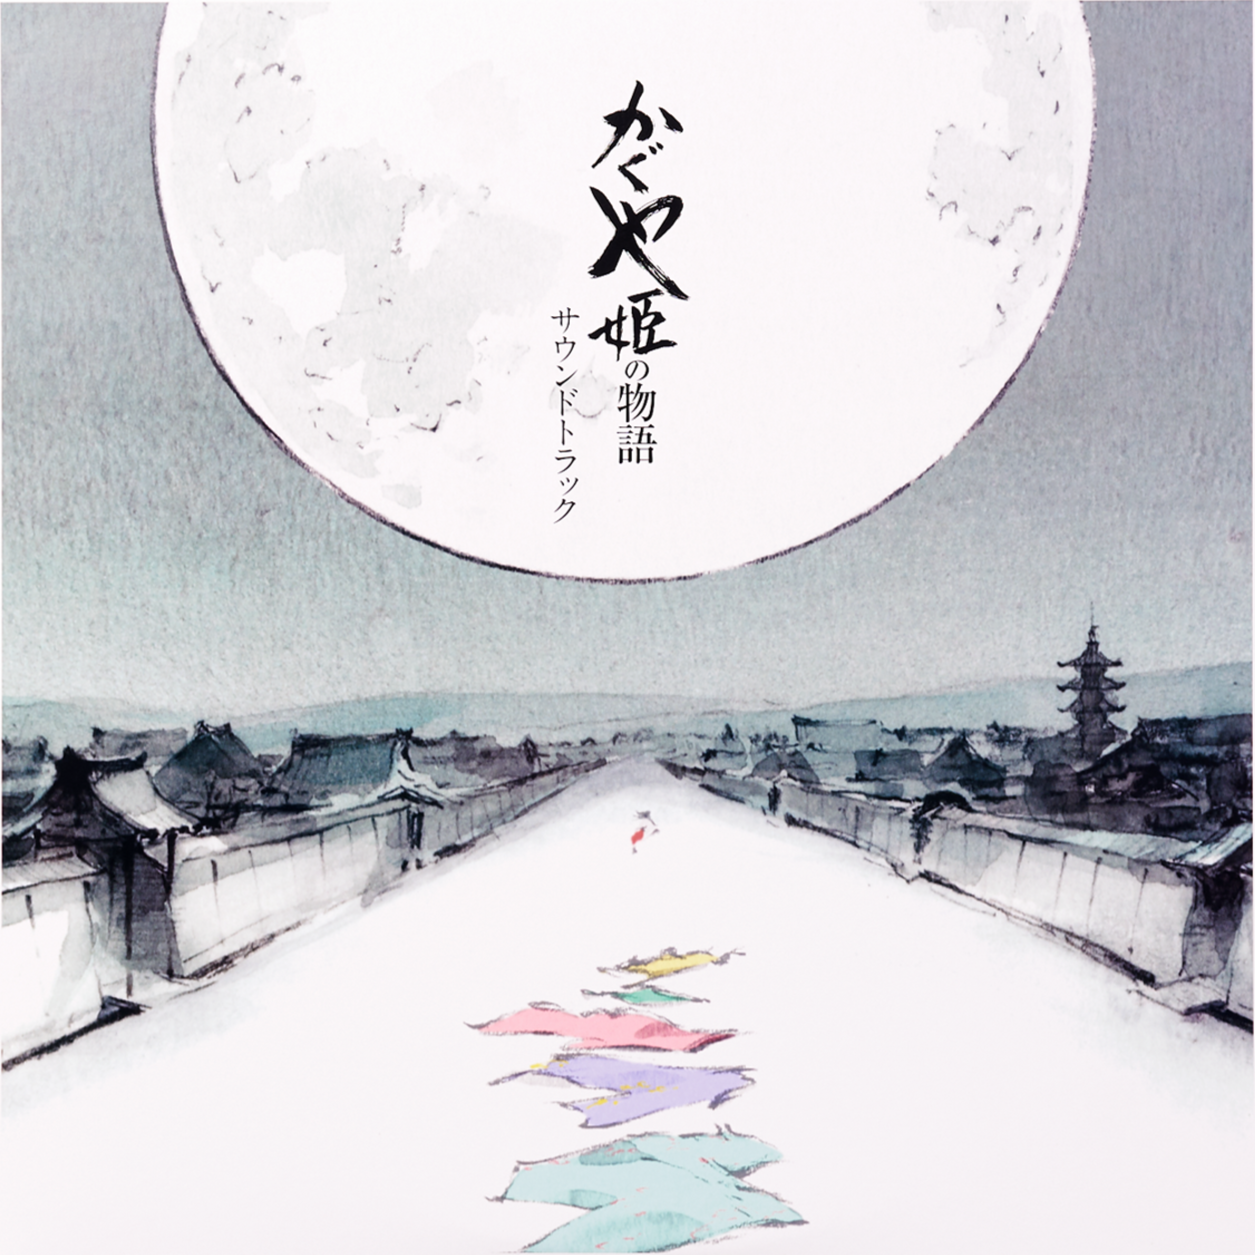 TJJA-10034 - Joe Hisaishi - The Tale Of The Princess Kaguya: Soundtrack